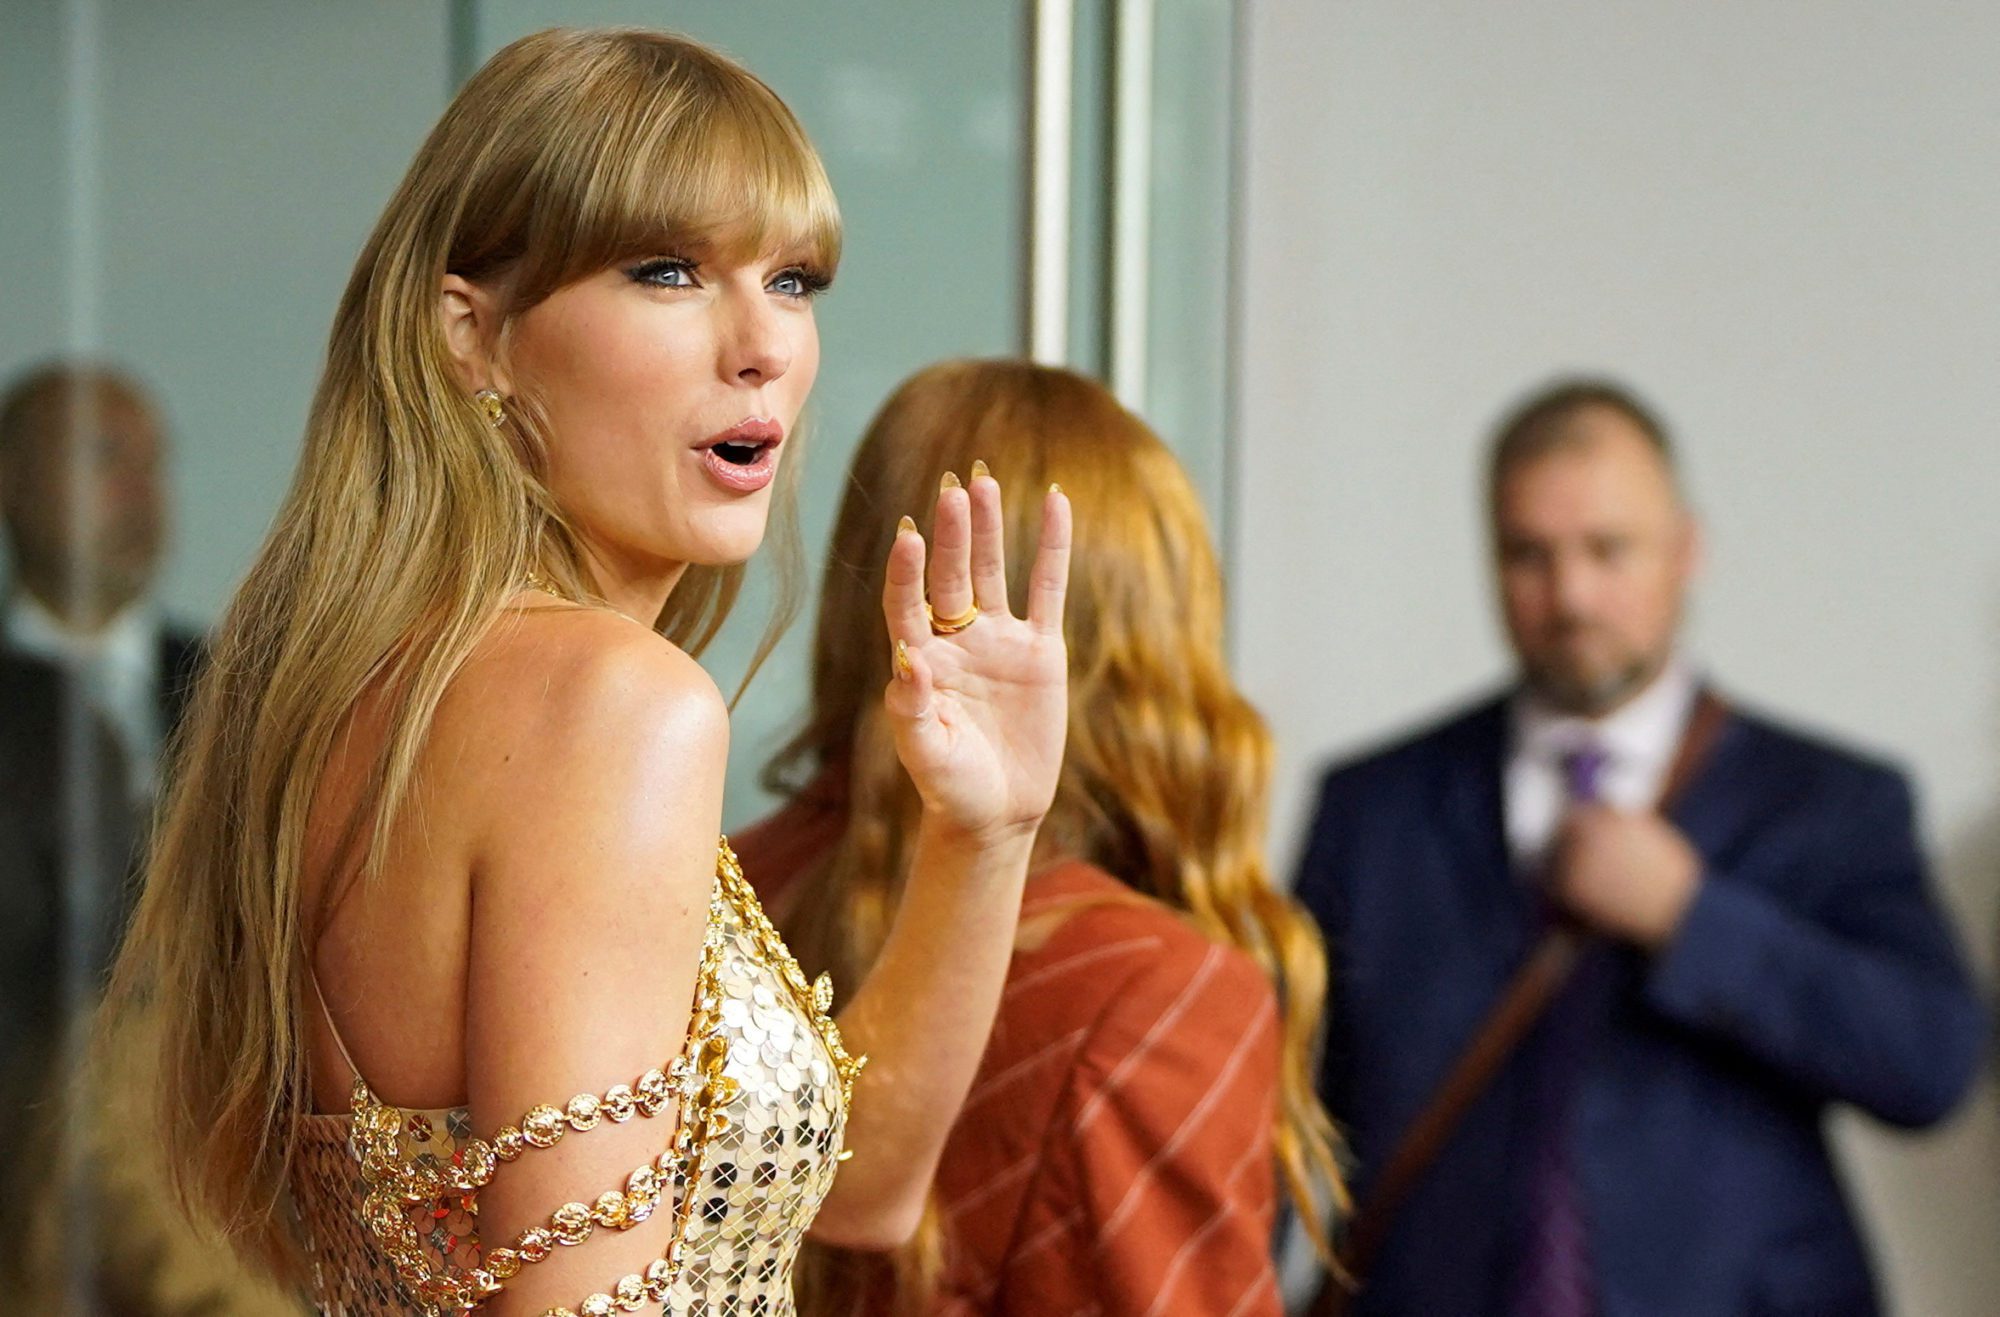 Singer Taylor Swift arrives to speak at the Toronto International Film Festival (TIFF) in Toronto, Ontario, Canada September 9, 2022. REUTERS/Mark Blinch/File Photo